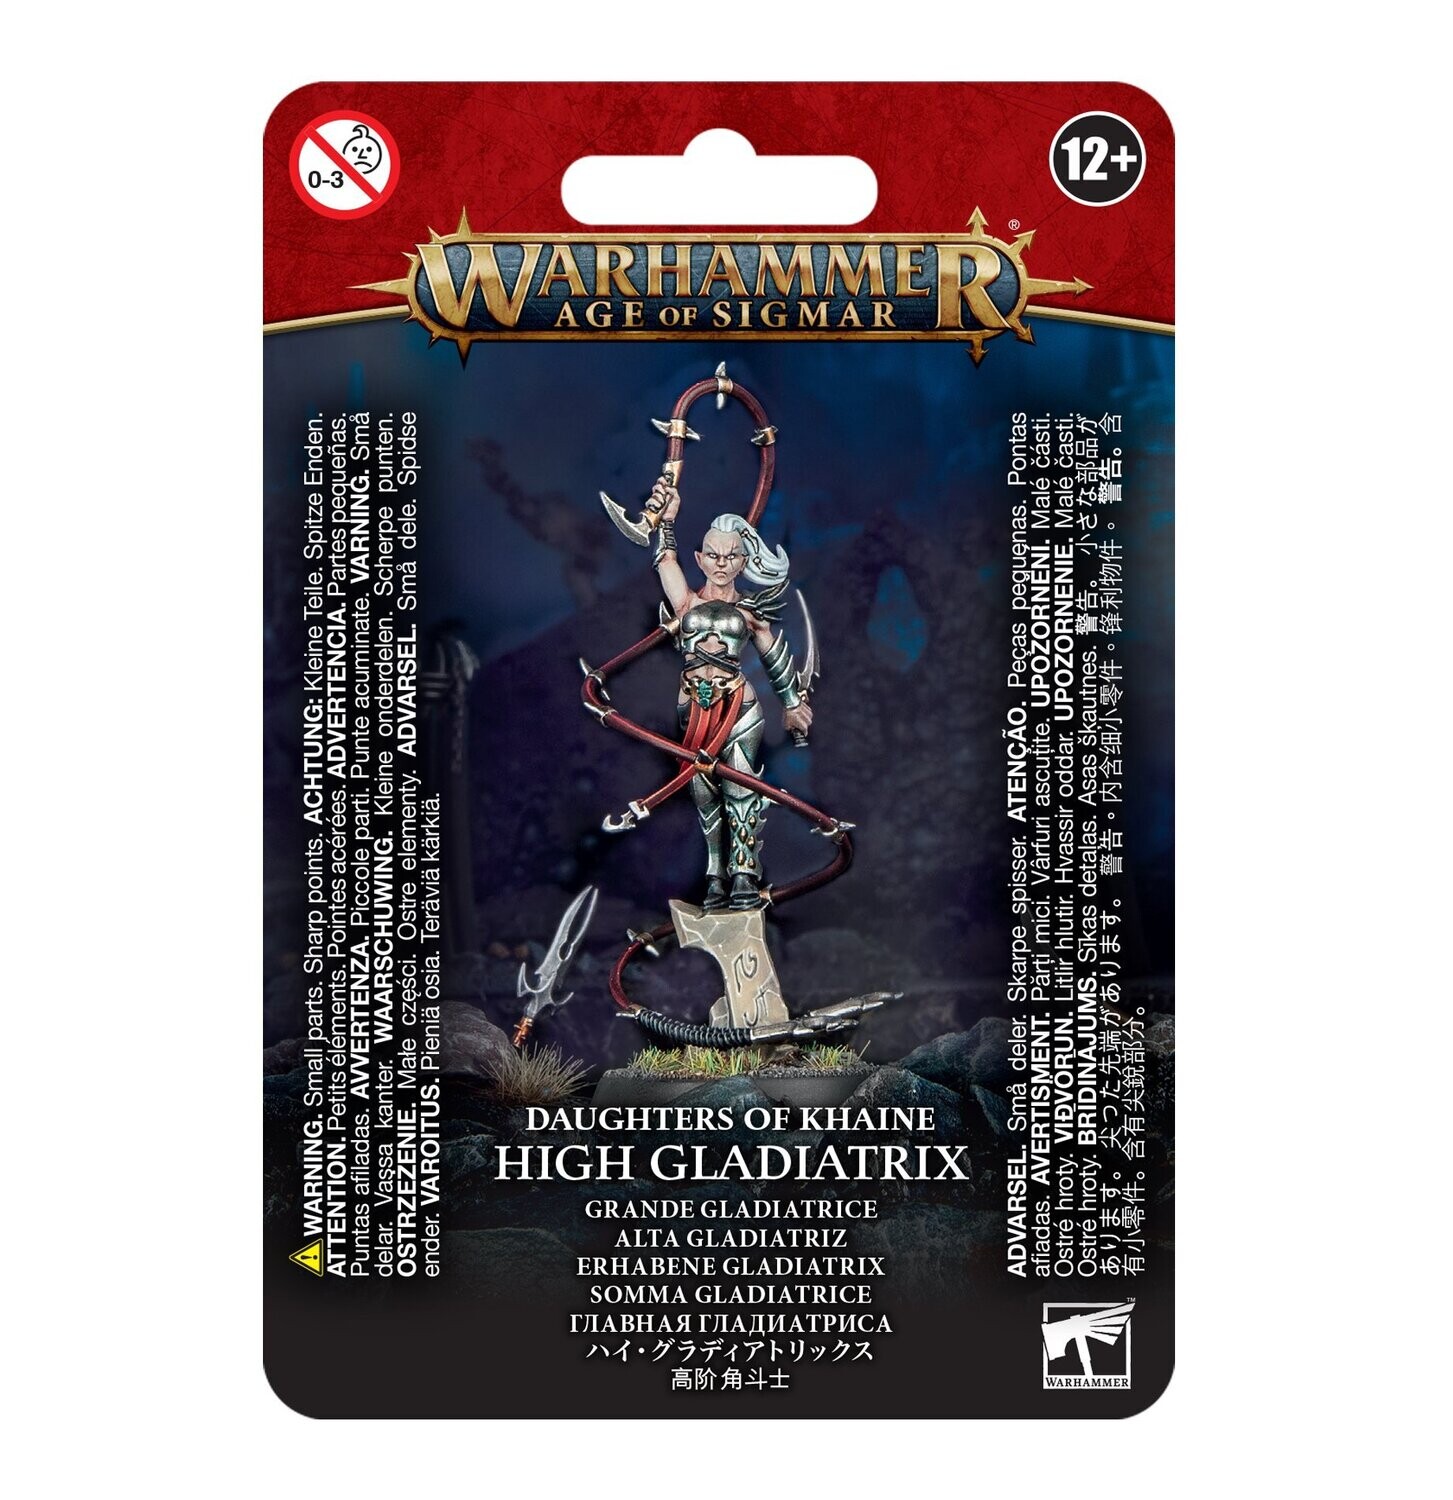 MO: Erhabene Gladiatrix - High Gladiatrix - Daughters of Khaine - Warhammer Age of Sigmar - Games Workshop